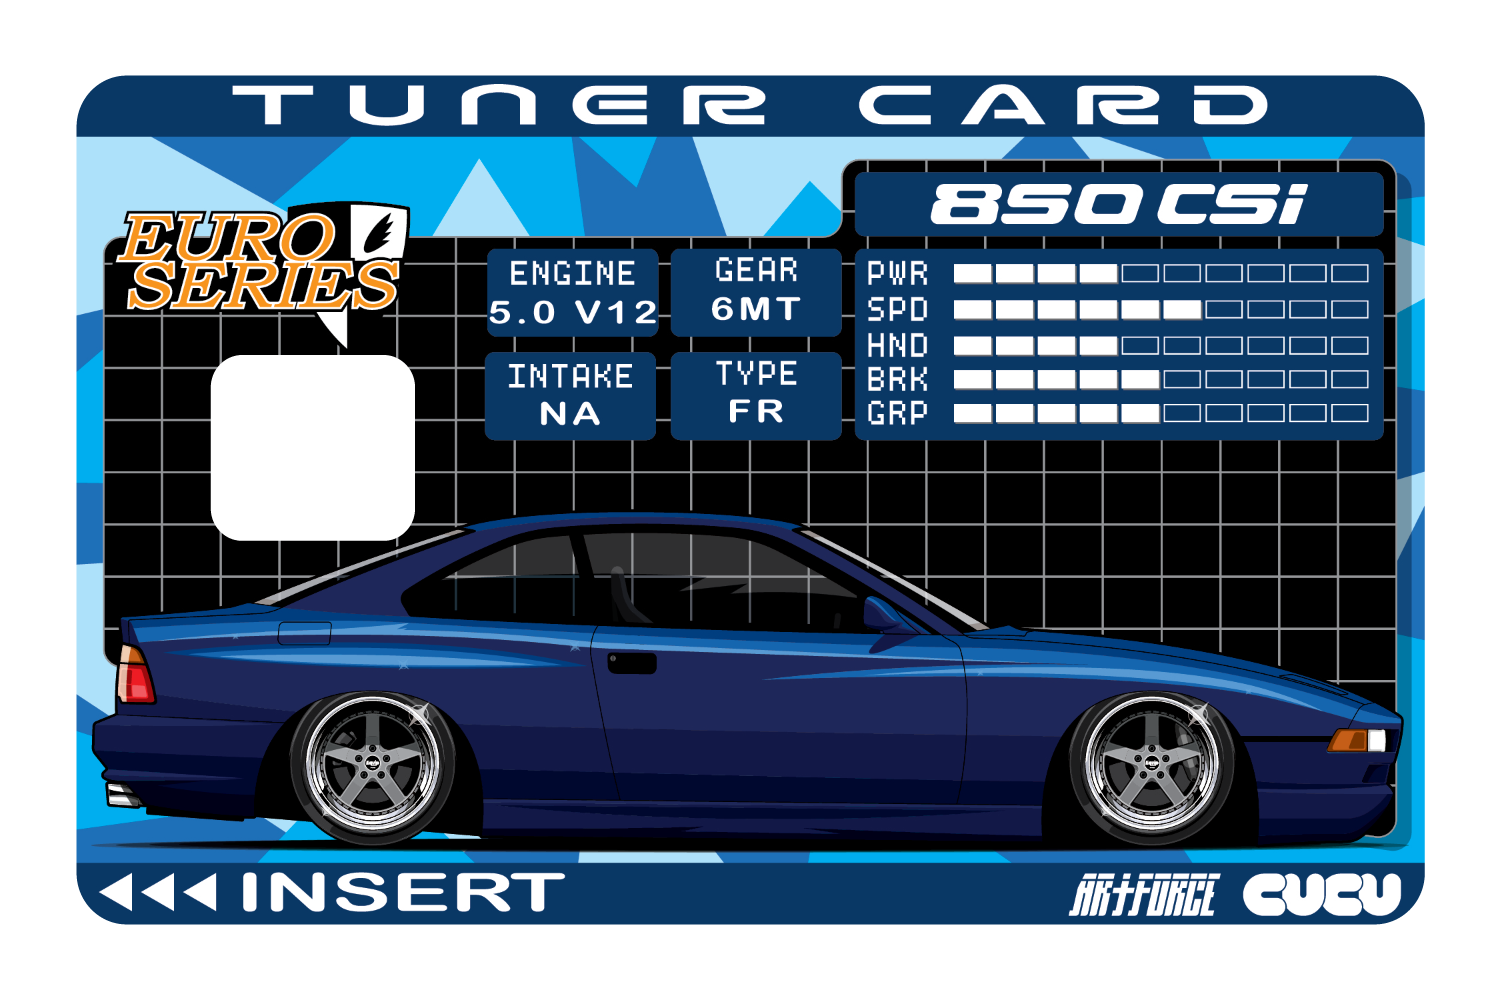 850CSI Tuner Card